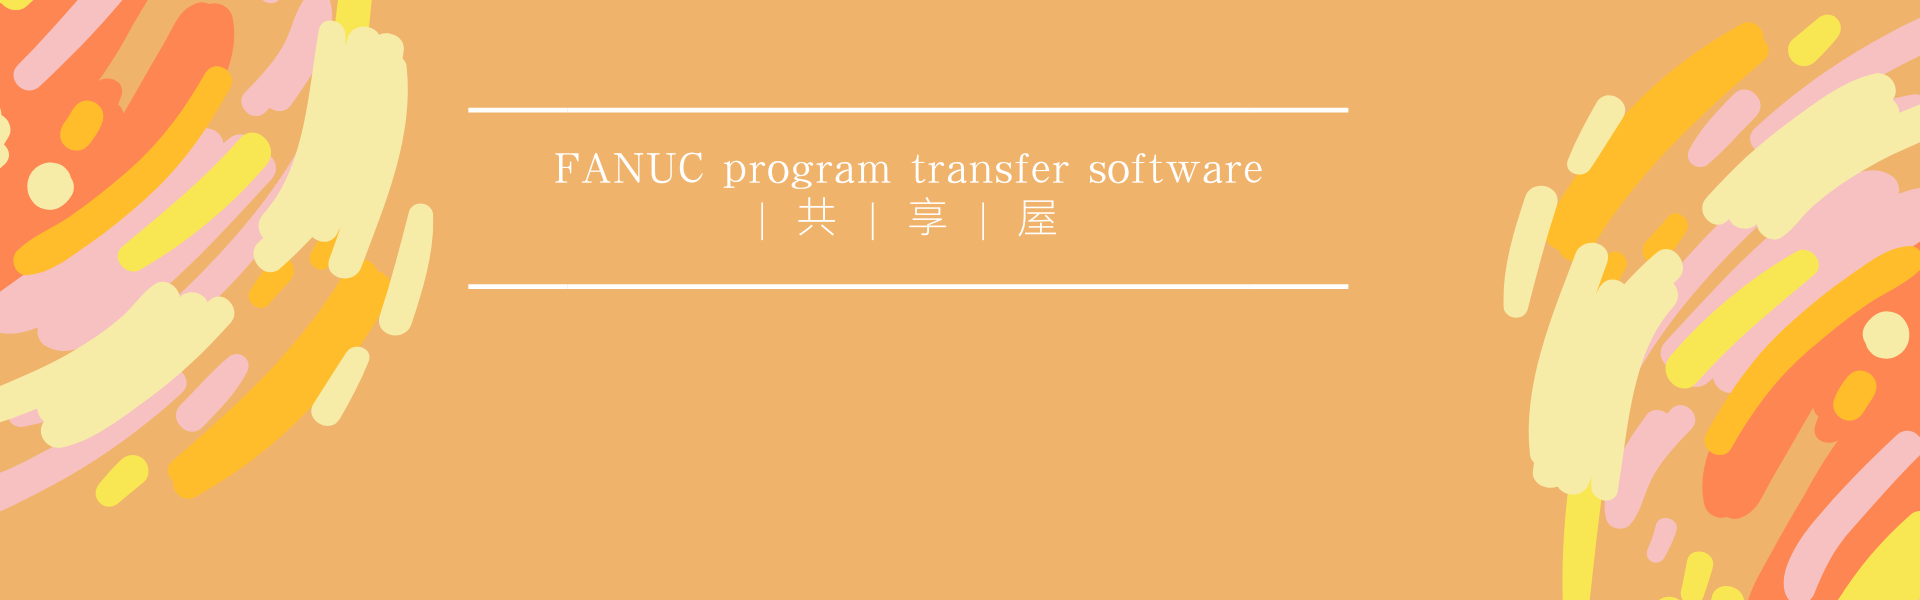 FANUC Program Transfer Software A08B_9510_J515 - FANUC CNC-FANUC CNC